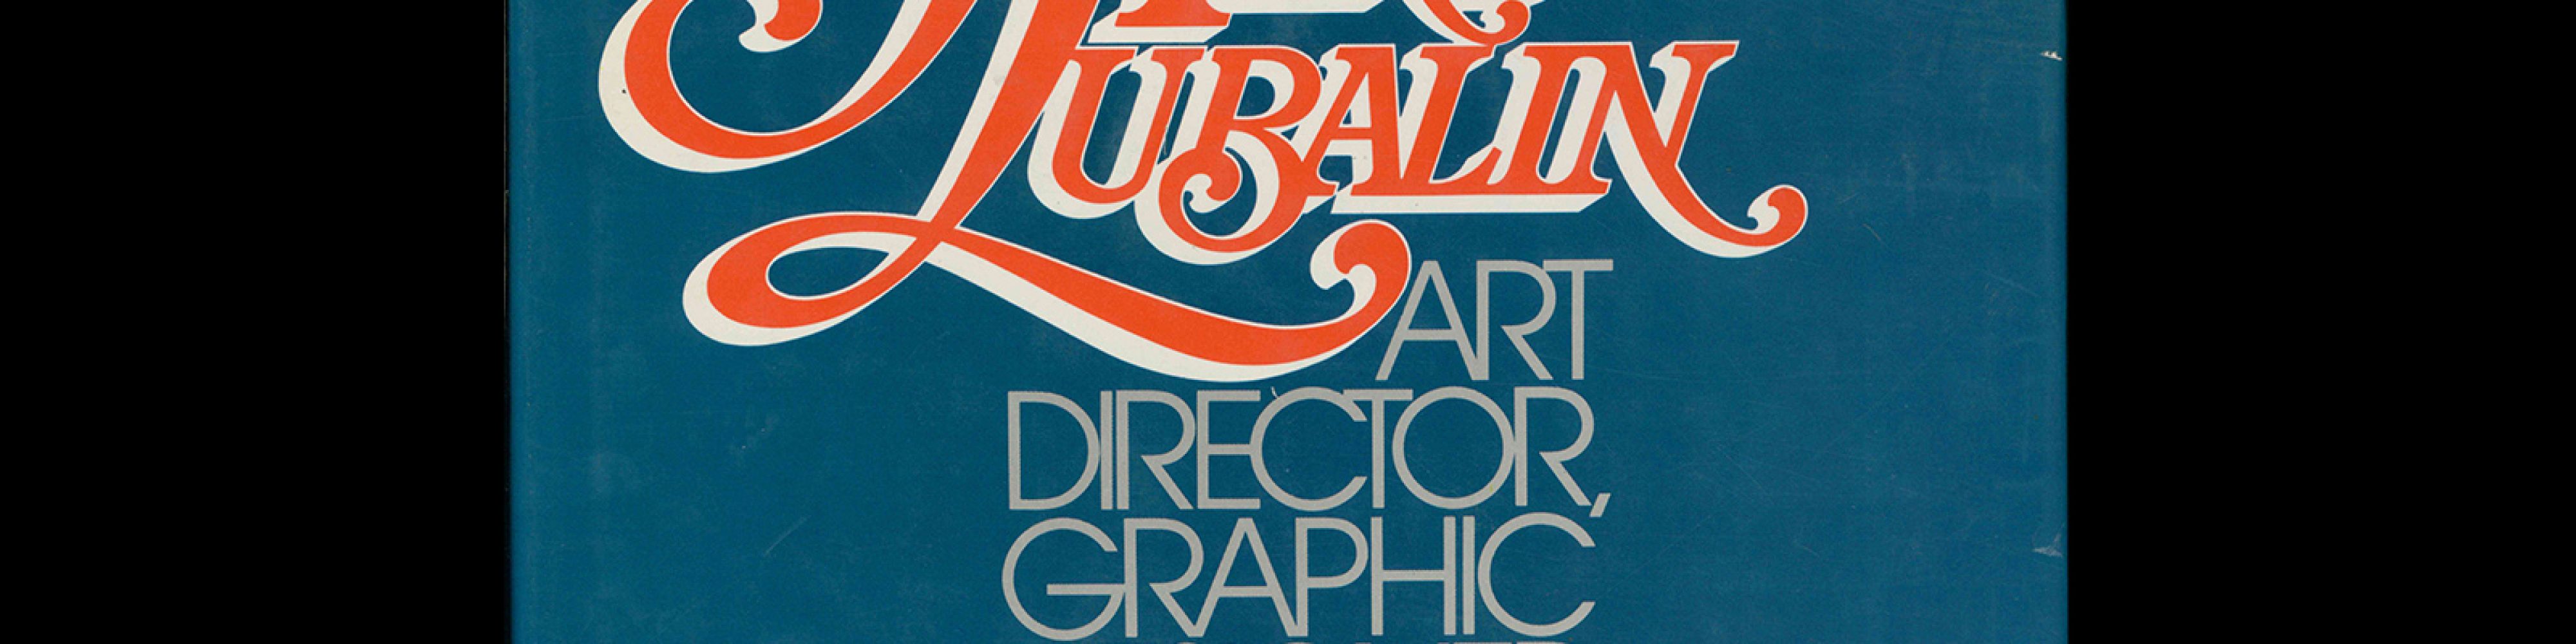 Herb Lubalin, Art Director, Graphic Designer And Typographer, 1985